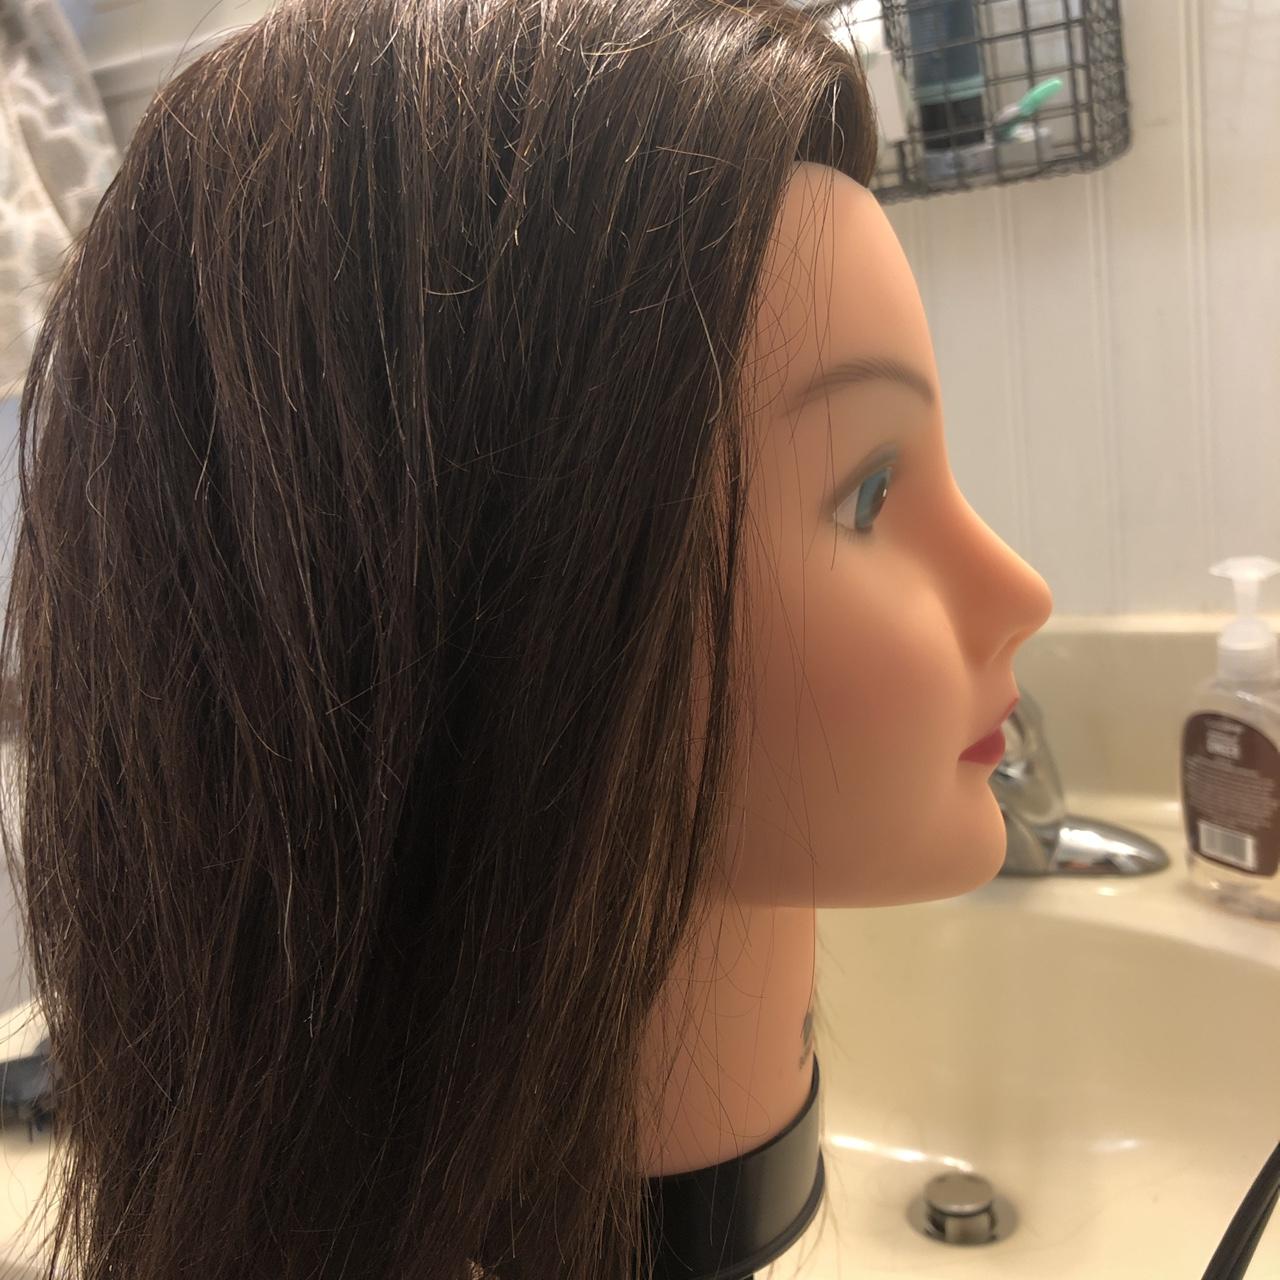 Burmax “Debra” mannequin head for hair styling. - Depop